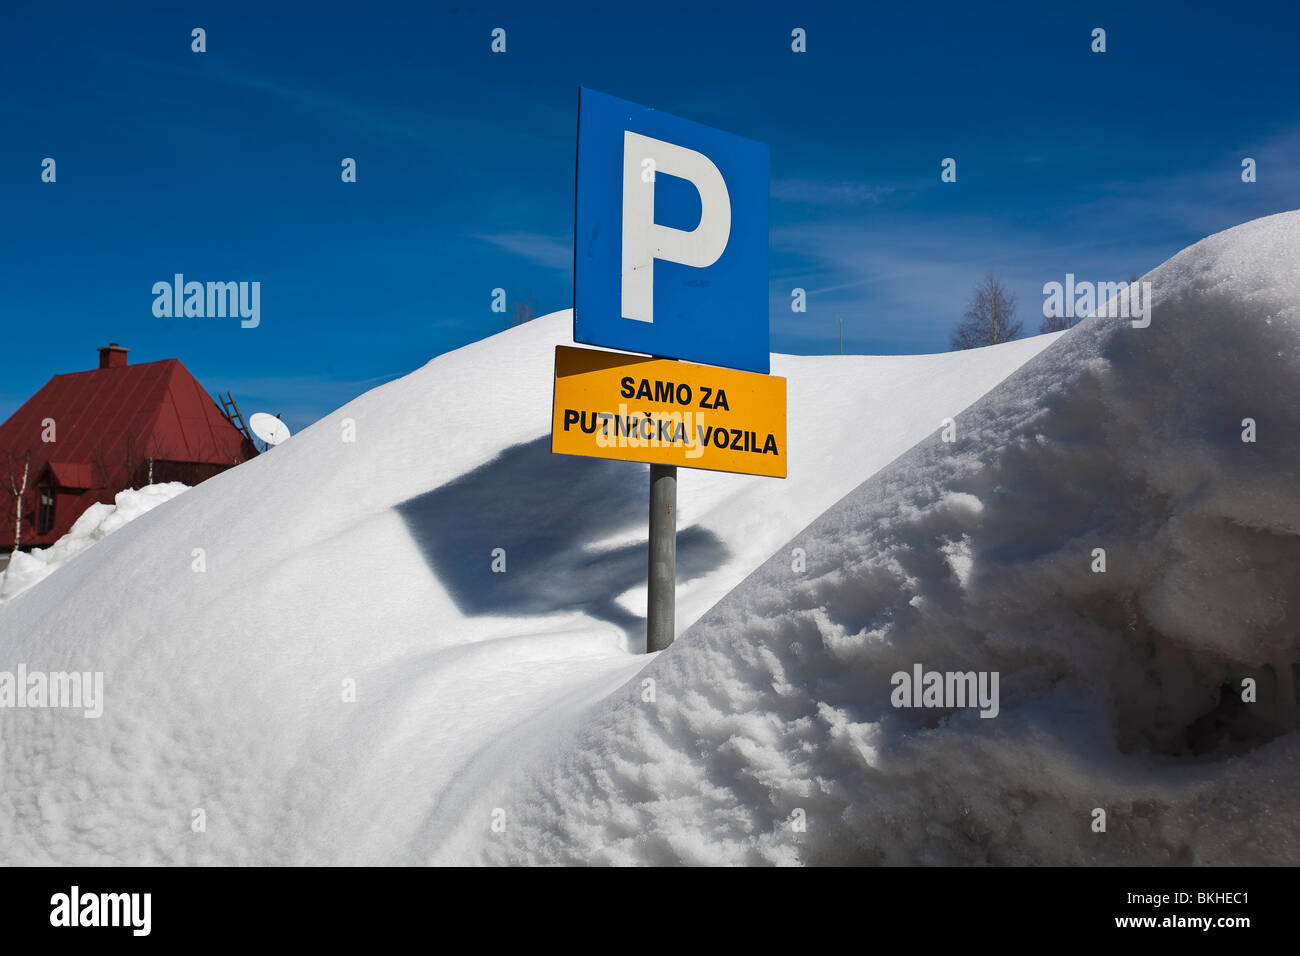 Plaza de aparcamiento en nieve profunda, Zabljak, Montenegro Foto de stock